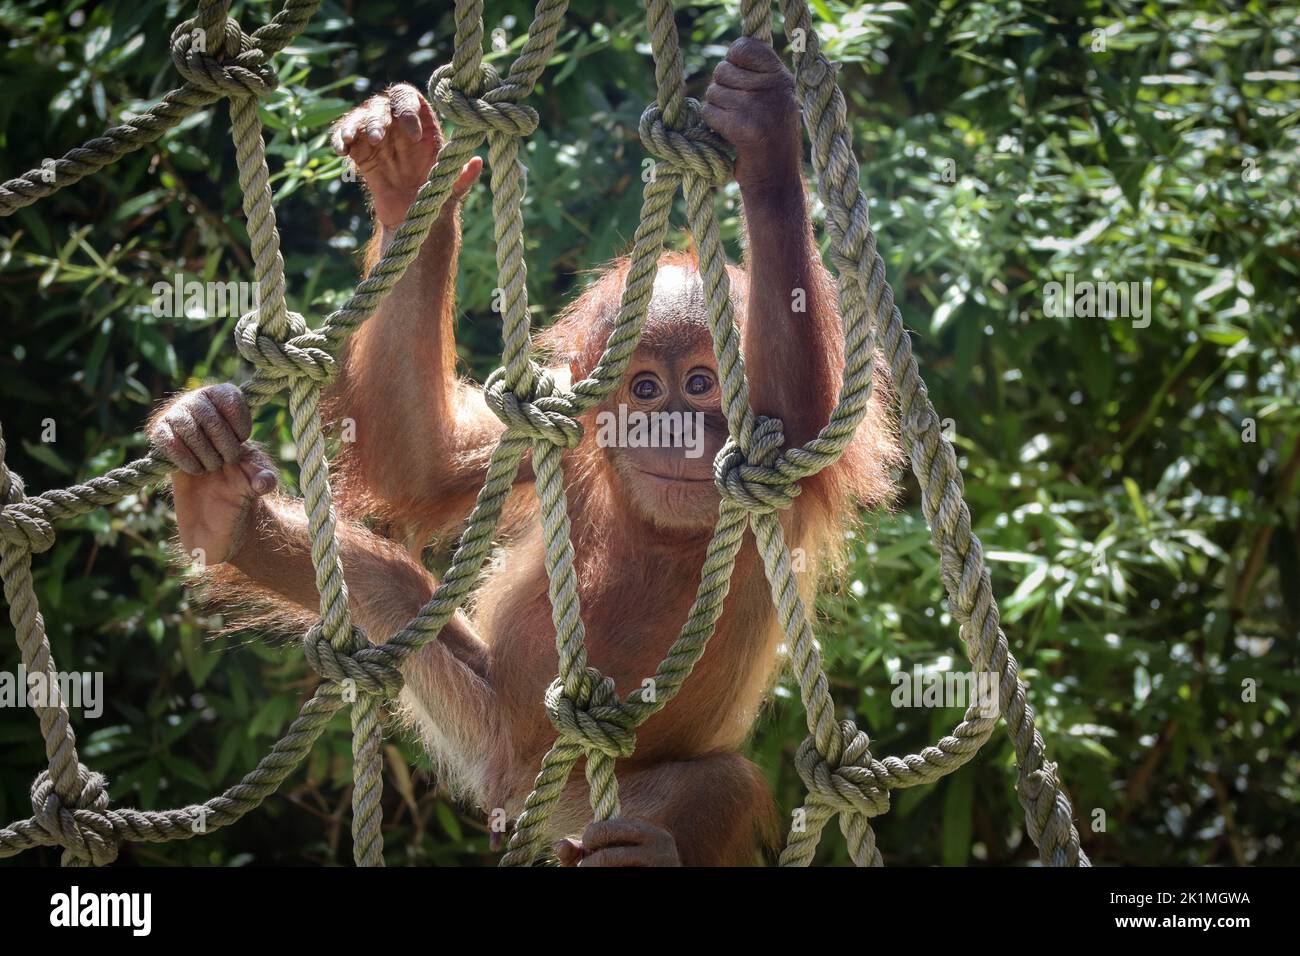 Young Sumatran Orangutan on Rope in Zoological Garden. Baby Monkey of Pongo Abelii in Zoo. Stock Photo